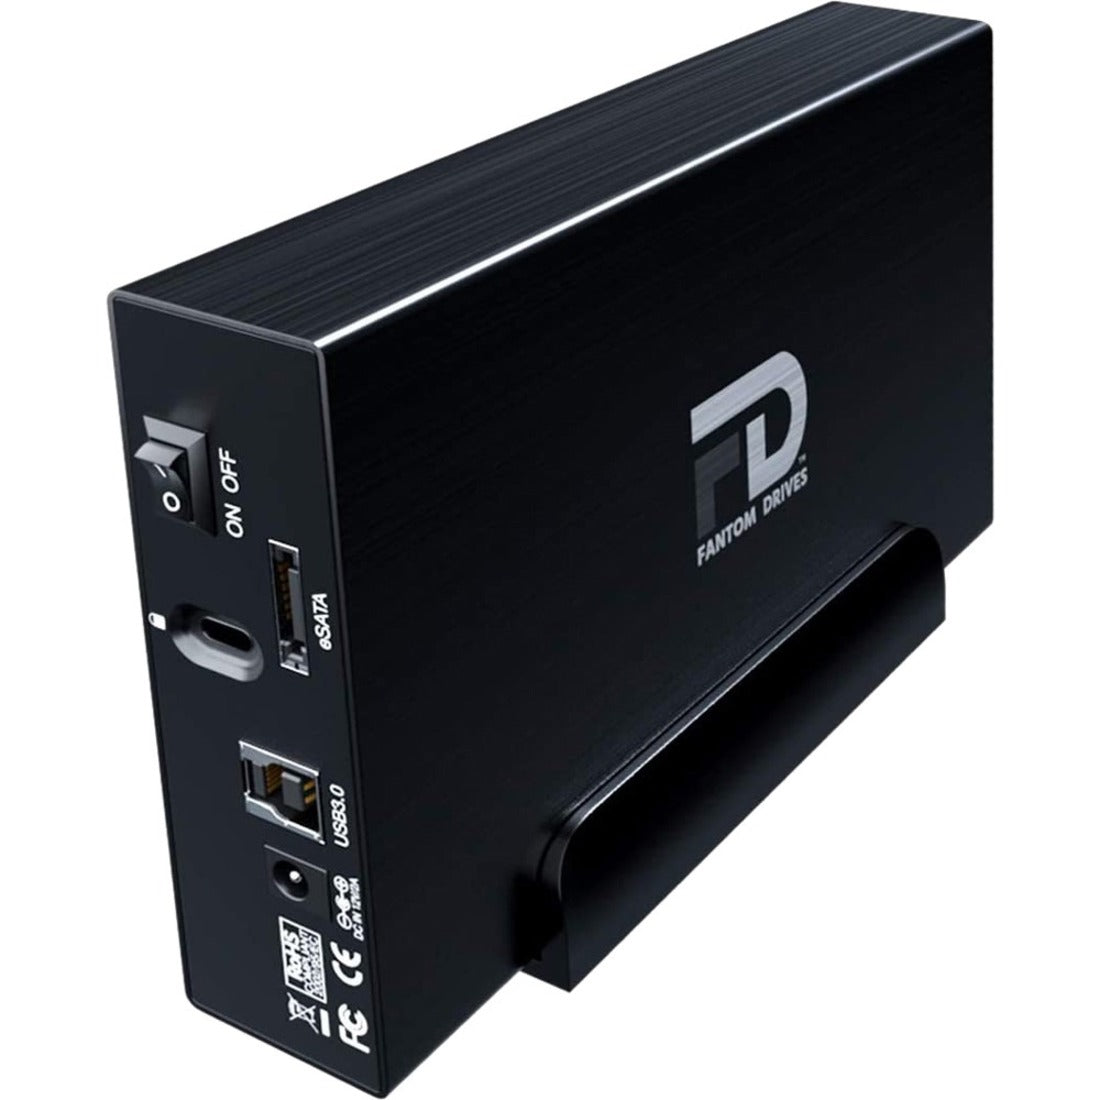 Fantom Drives GF3B16000EU GFORCE 16TB External Hard Drive - USB 3.2 Gen 1 & eSATA - Black, High-Speed Data Storage Solution